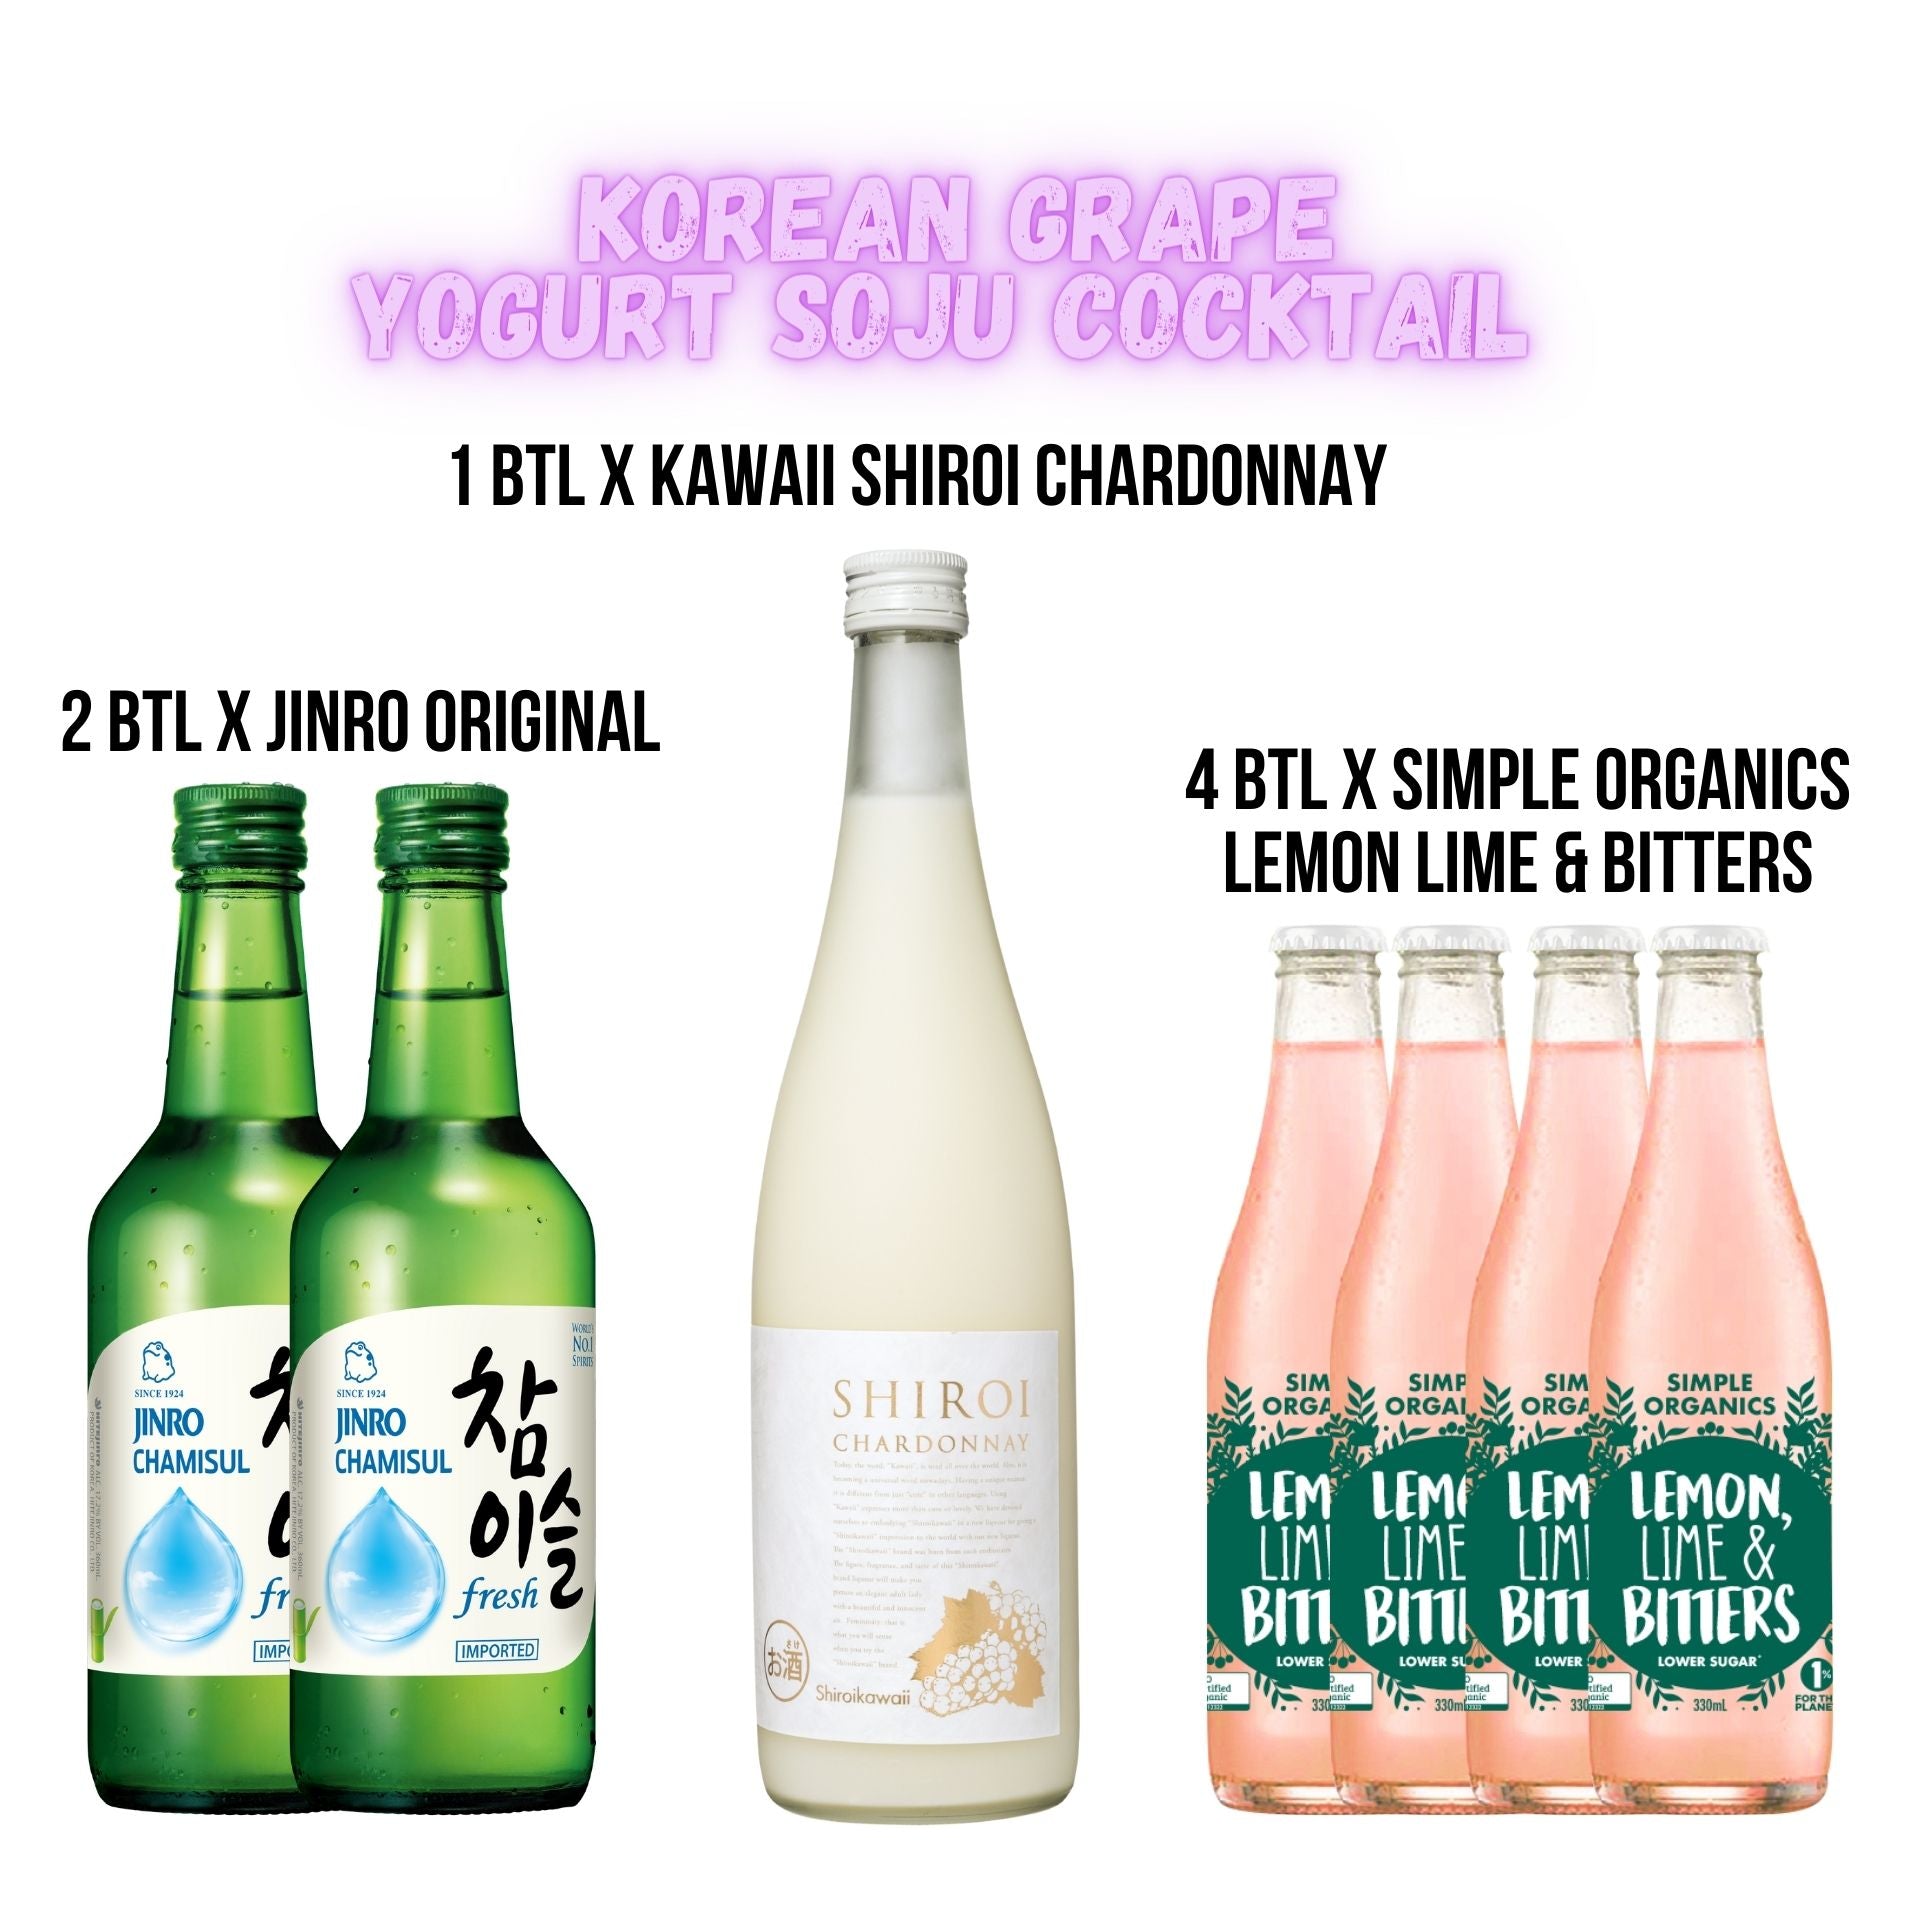 Korean Grape Yogurt Soju Cocktail Bundle ( 1 x Kawaii Chardonnay, 2 x Jinro Soju Original, 4 x Simple Organic Lemon Lime Bitters)